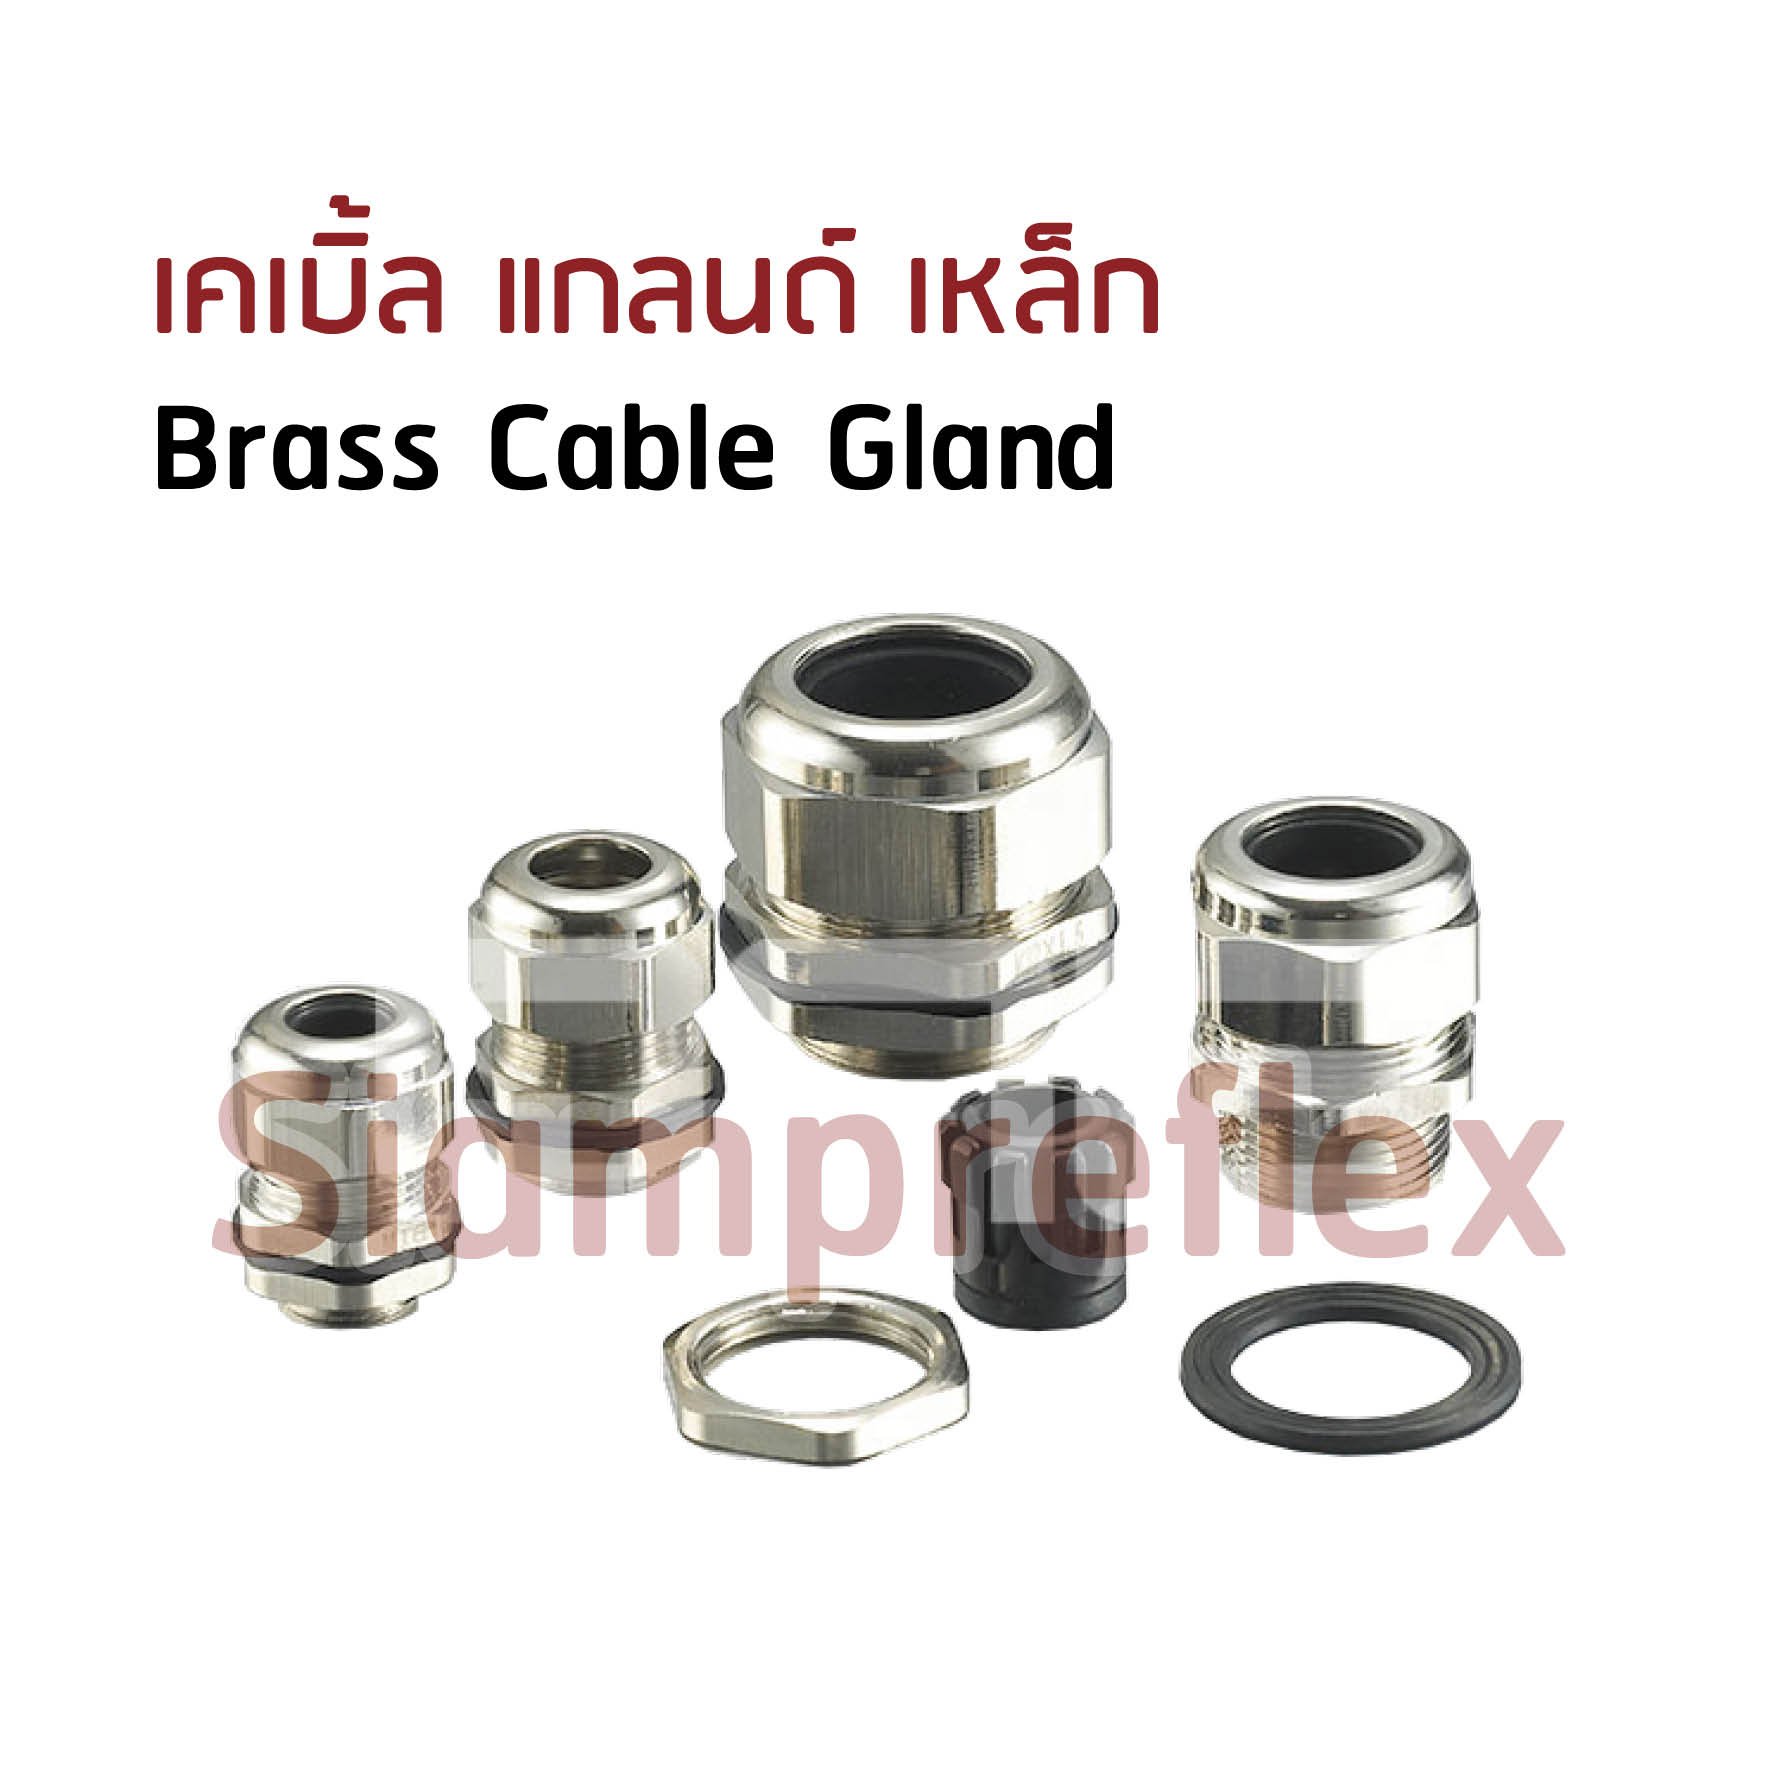 Brass Cable Gland (เคเบิ้ล แกลนด์ เหล็ก)